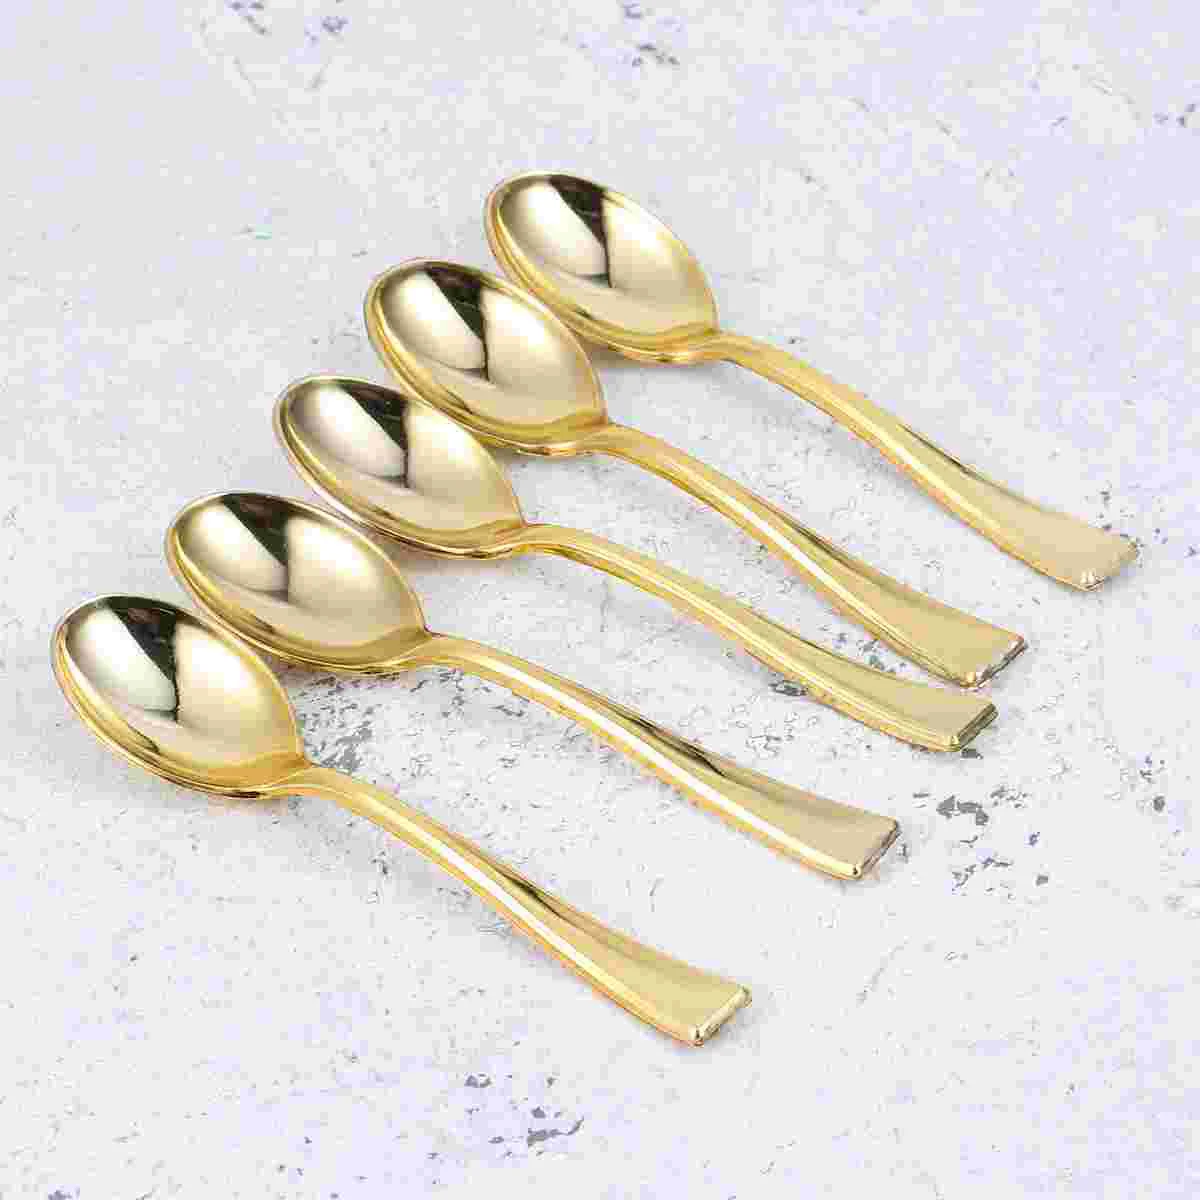 

Spoons Spoon Disposable Minidessert Tasting Ice Cream Cupcake Gold Appetizer Cake Sugar Serving Cutlery Flatware Forks Fruit